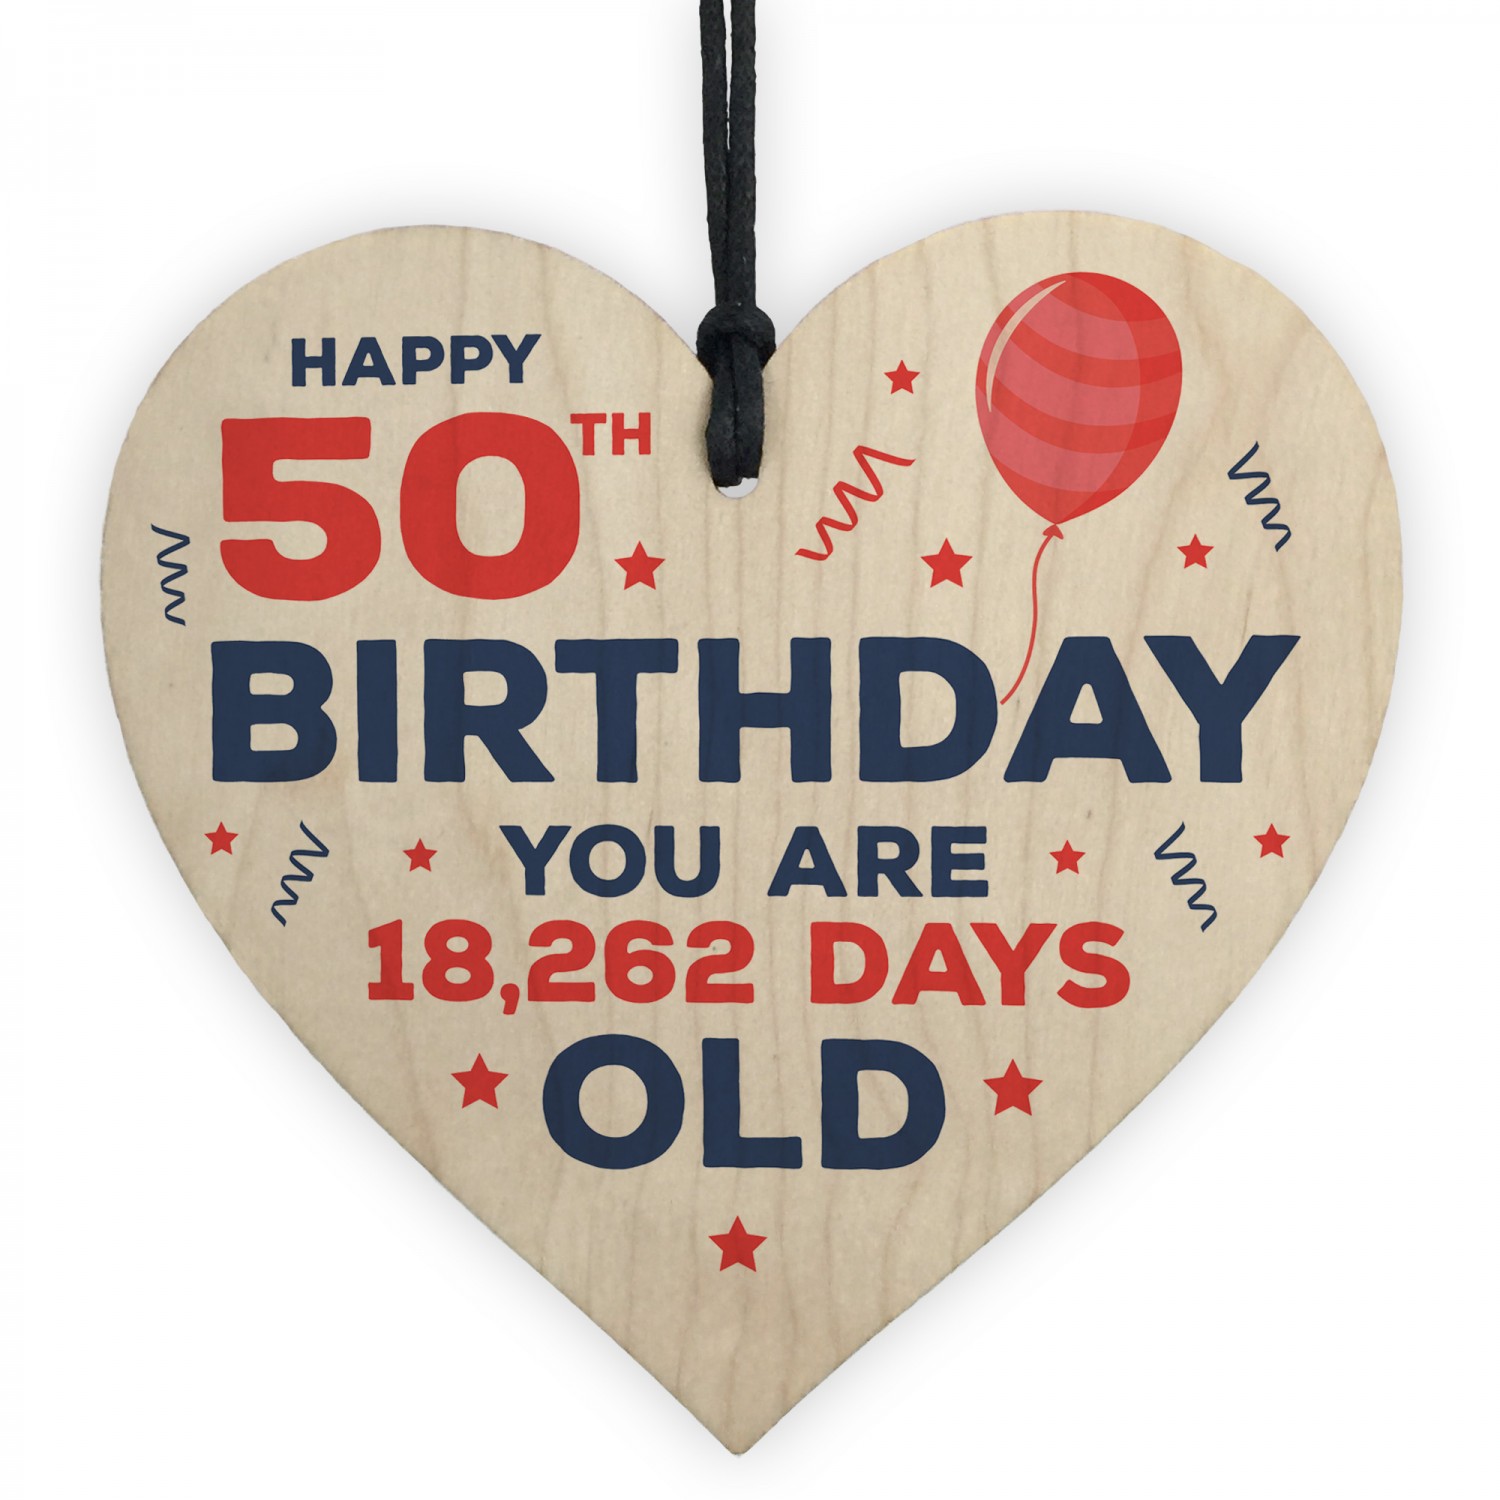 Happy 50th Birthday Funny Novelty Wooden Heart Birthday Gifts